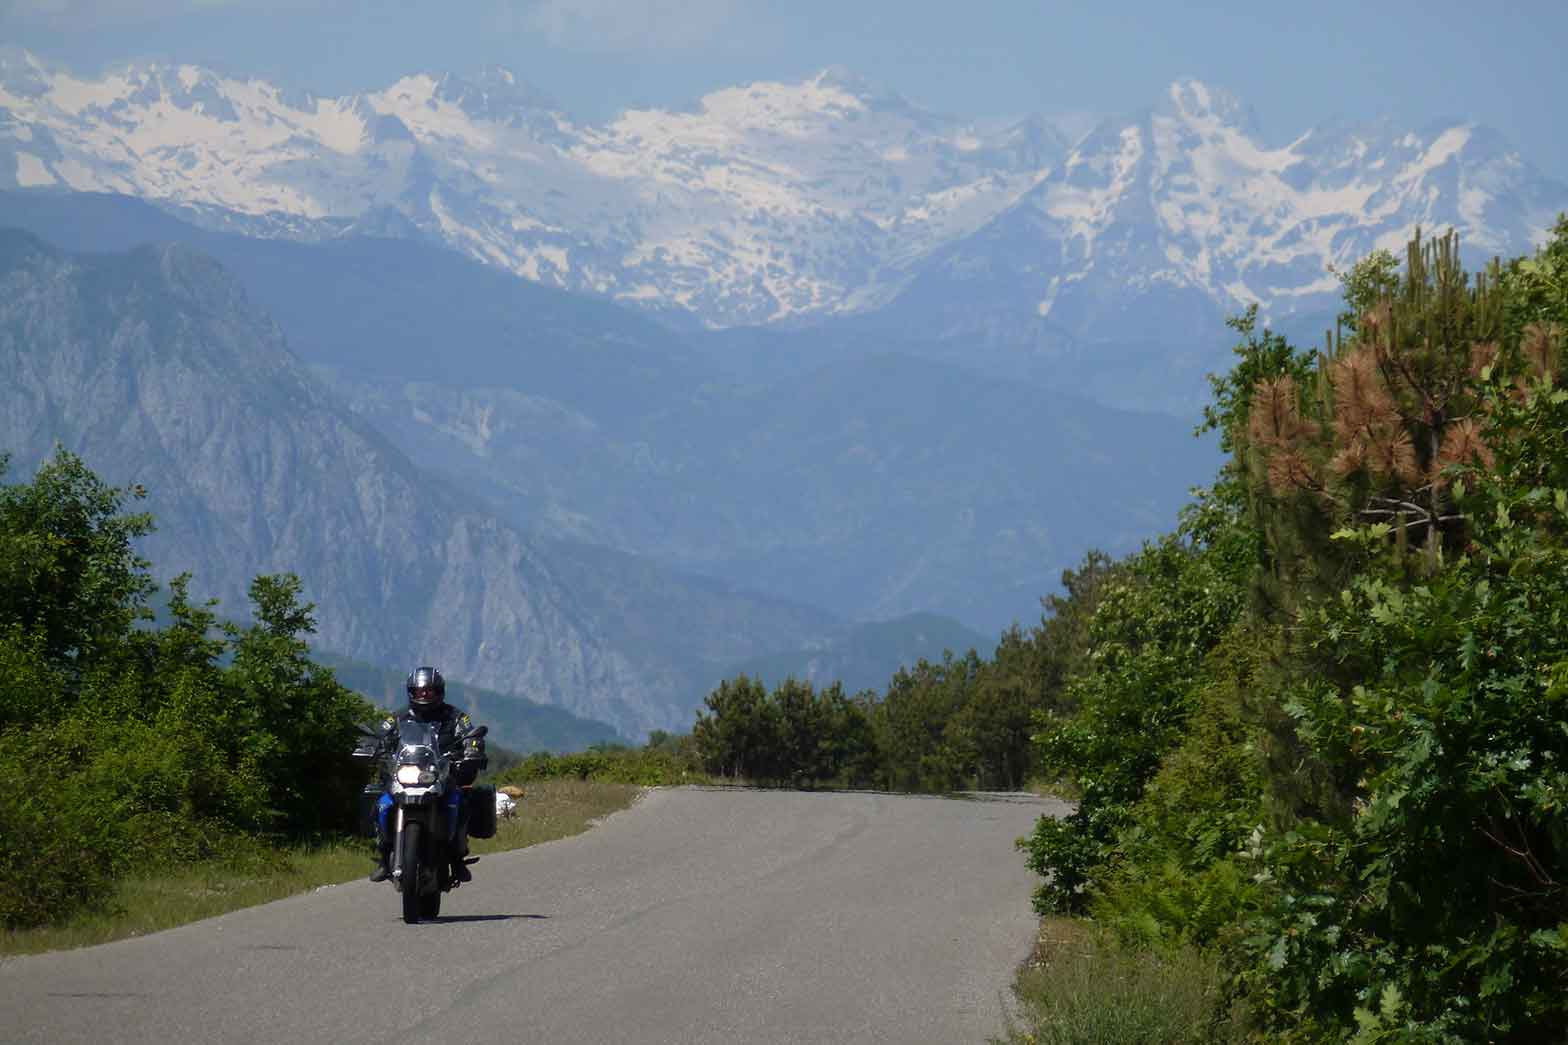 Albanian mountains